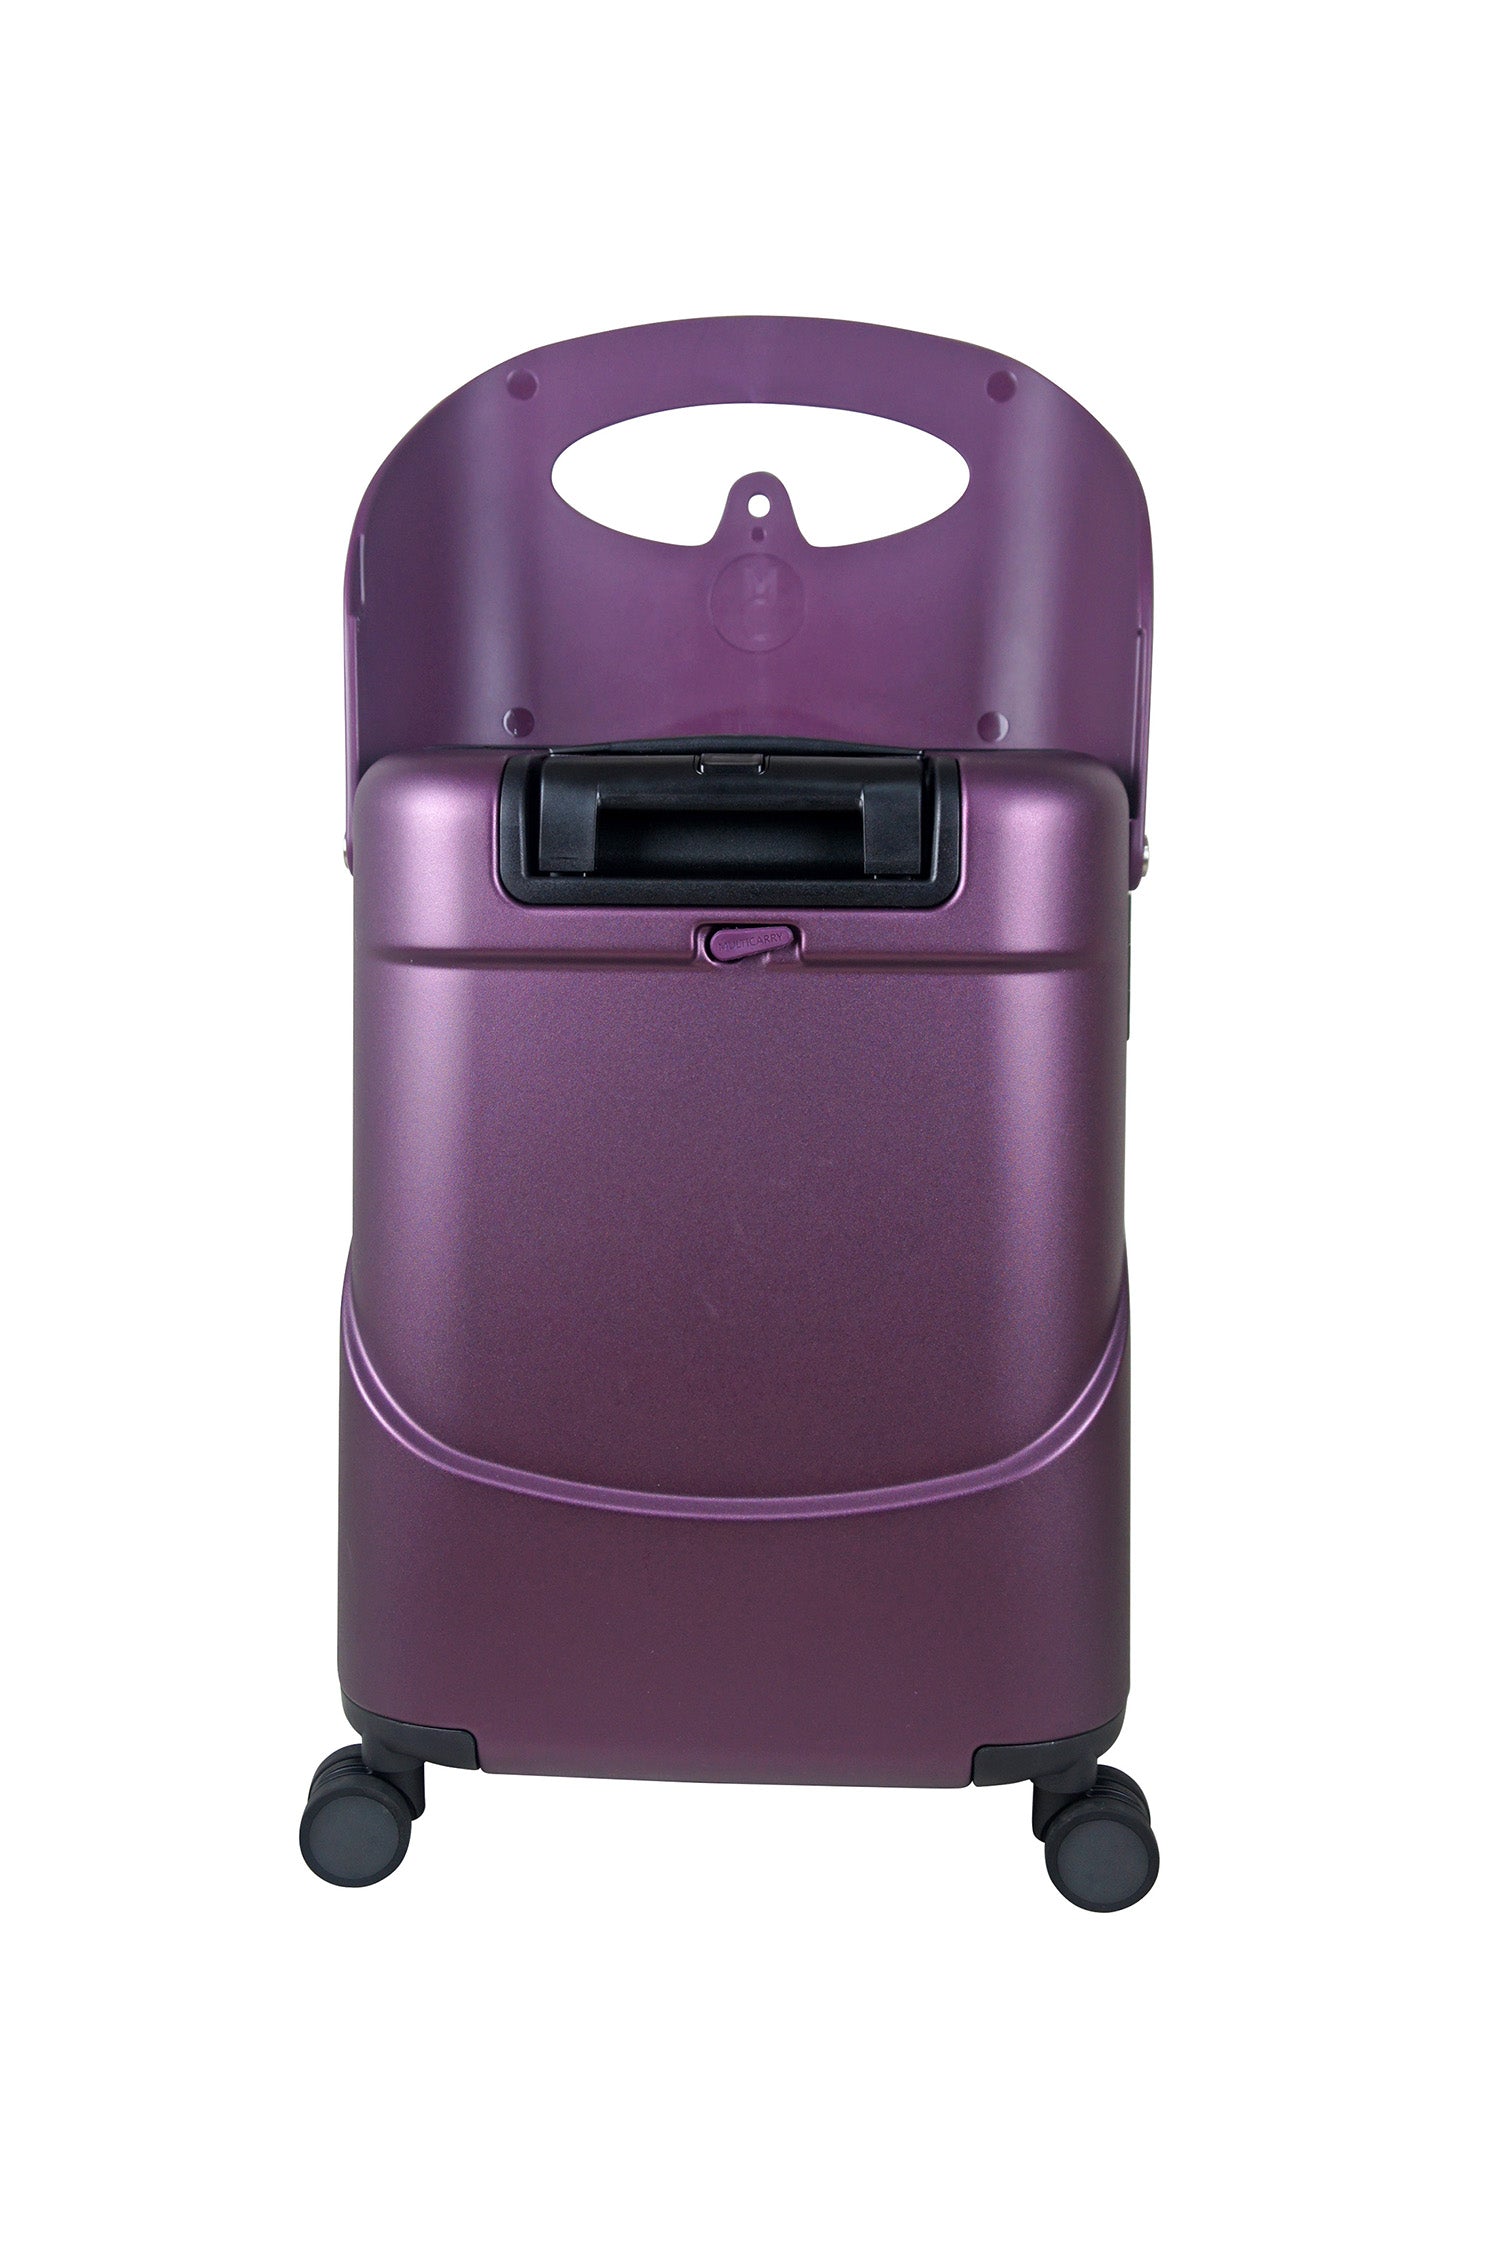 miamily luggage 18 inch royal purple